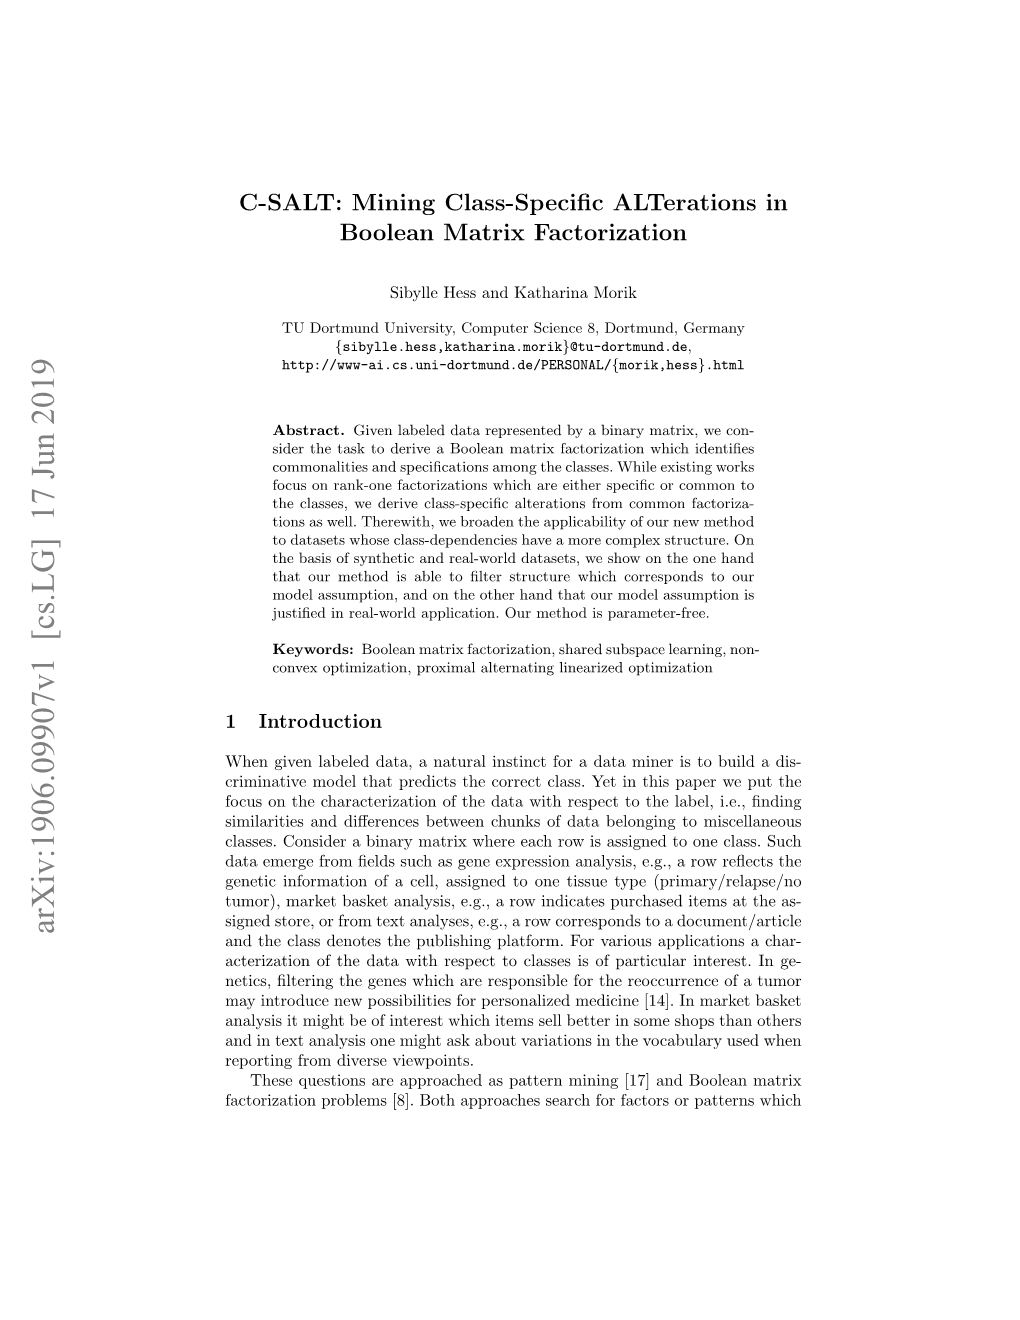 C-SALT: Mining Class-Specific Alterations in Boolean Matrix